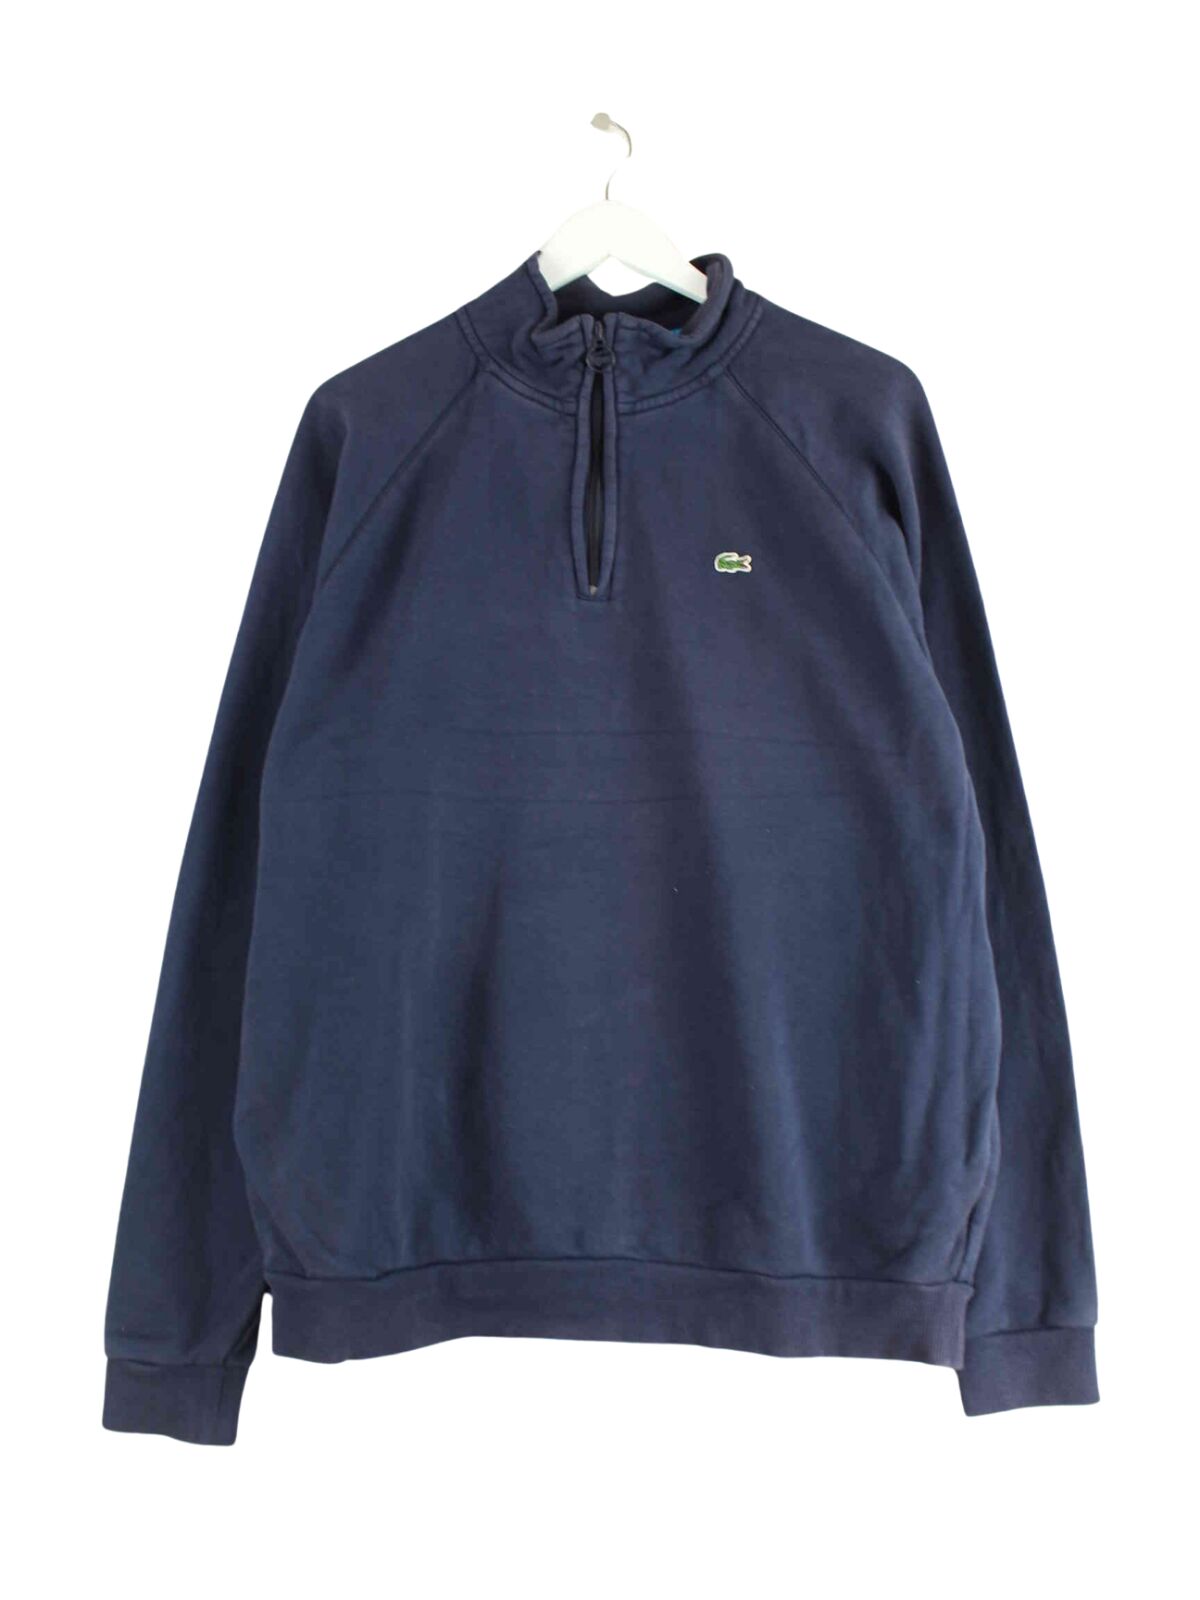 Lacoste 00s Half Zip Sweater Blau XL (front image)